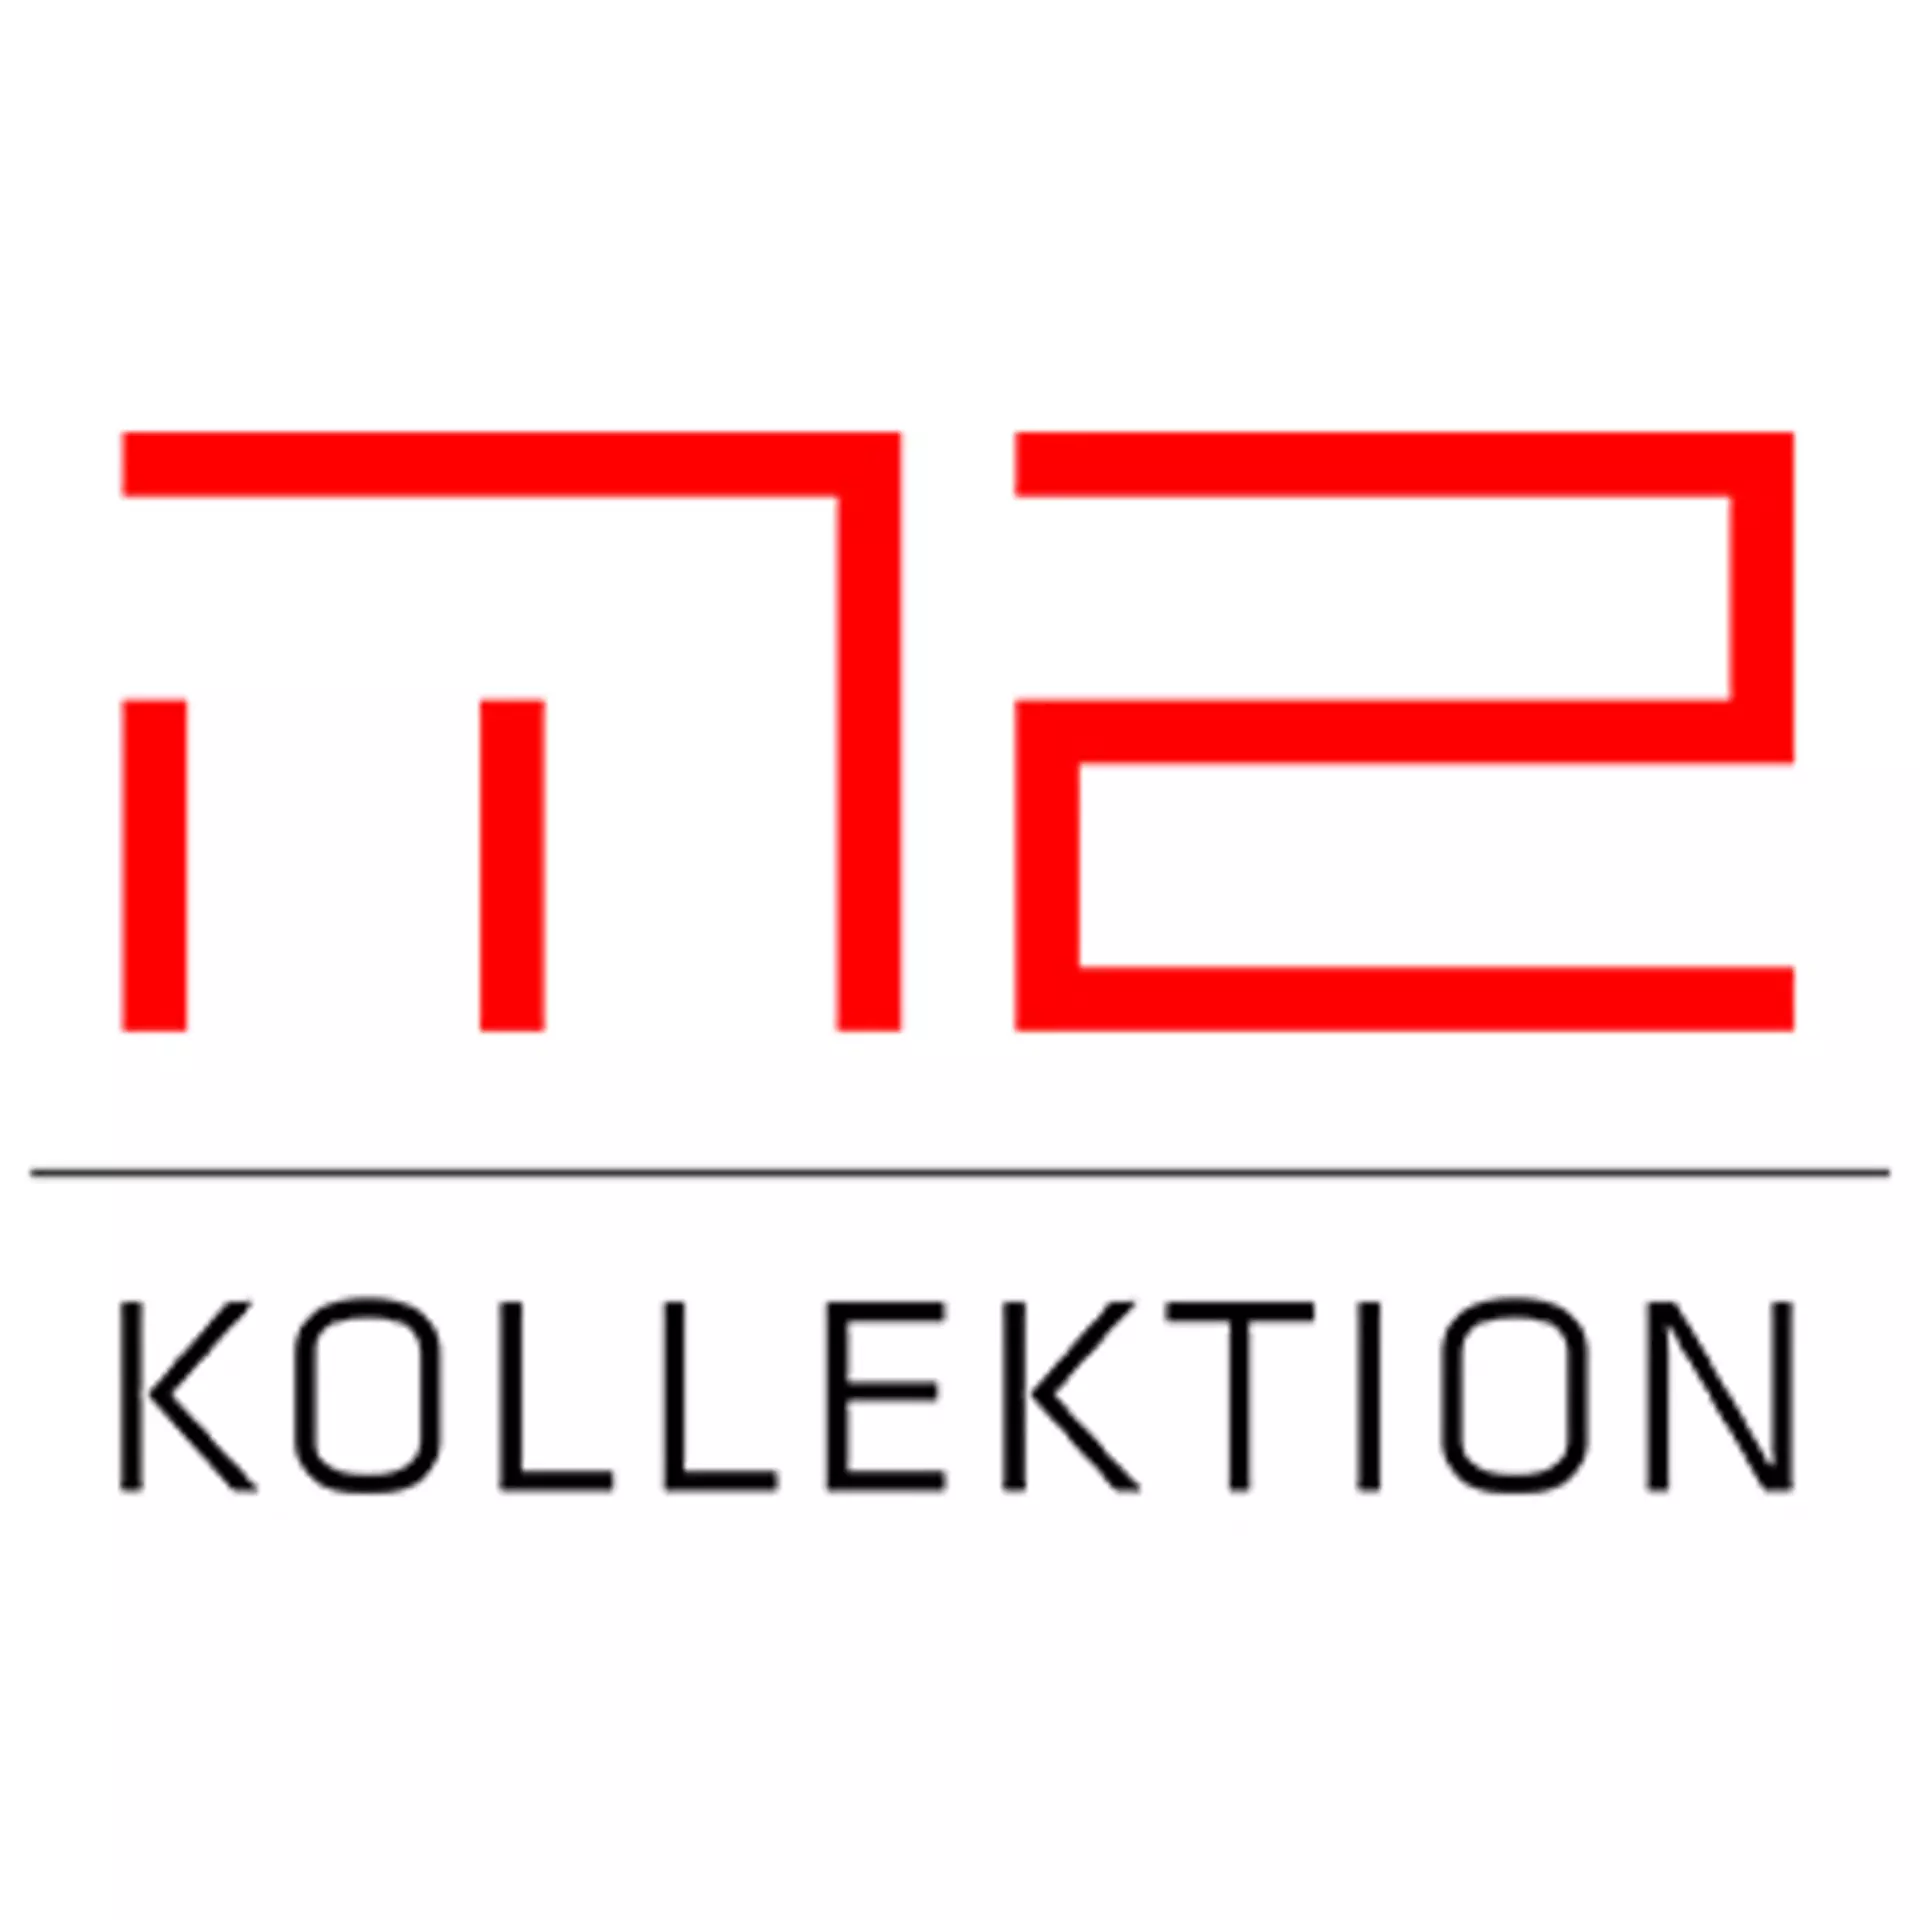 m2-LOLLEKTION Logo